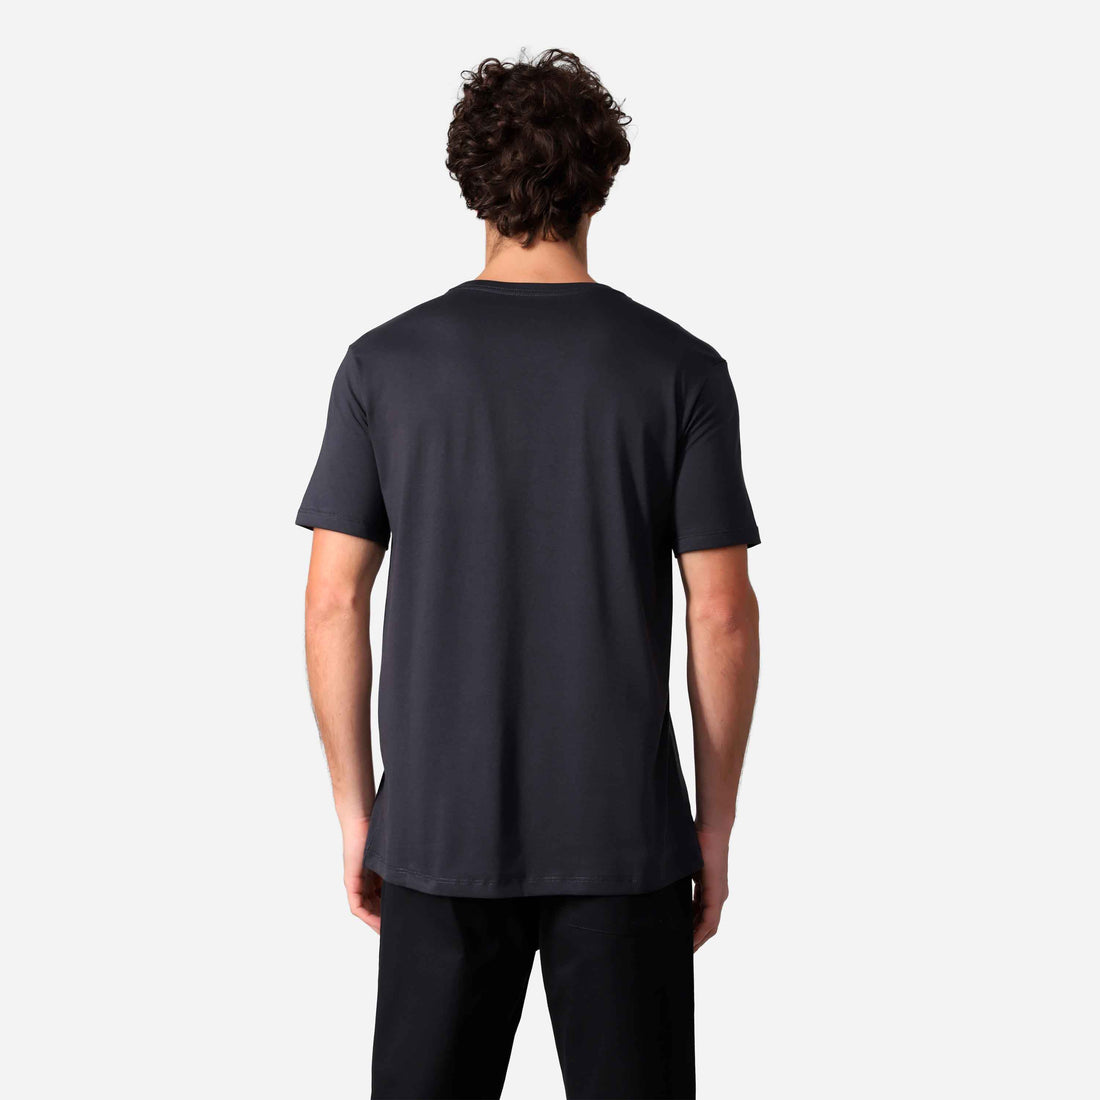 Camiseta Algodão Premium Masculina | Everyday Collection - Cinza Escuro